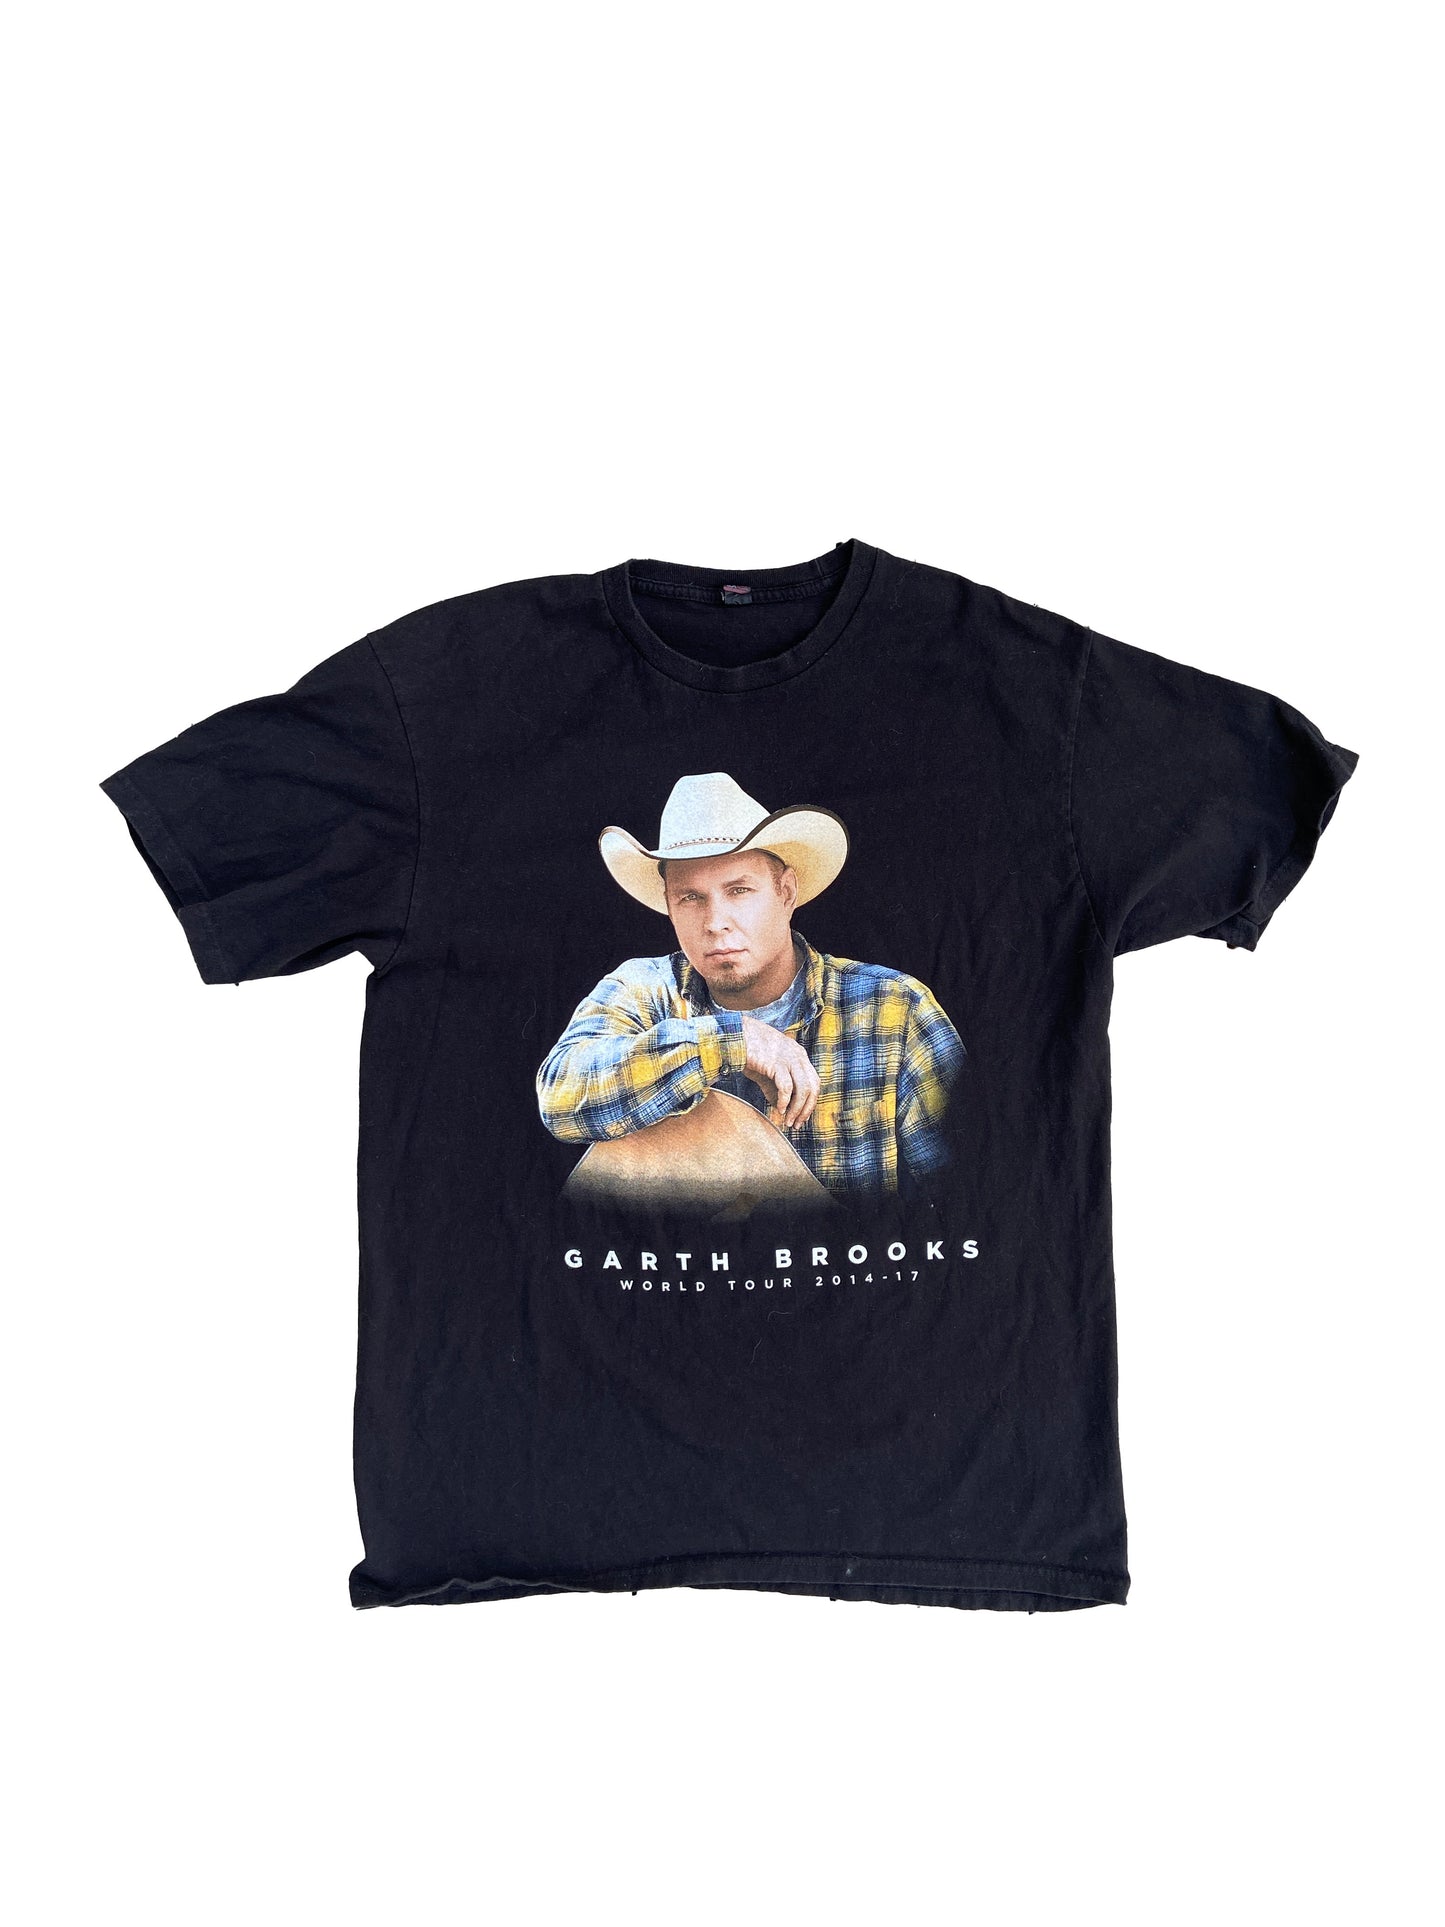 Garth Brooks 2014-2017 Country Cowboy World Tour Tee Black